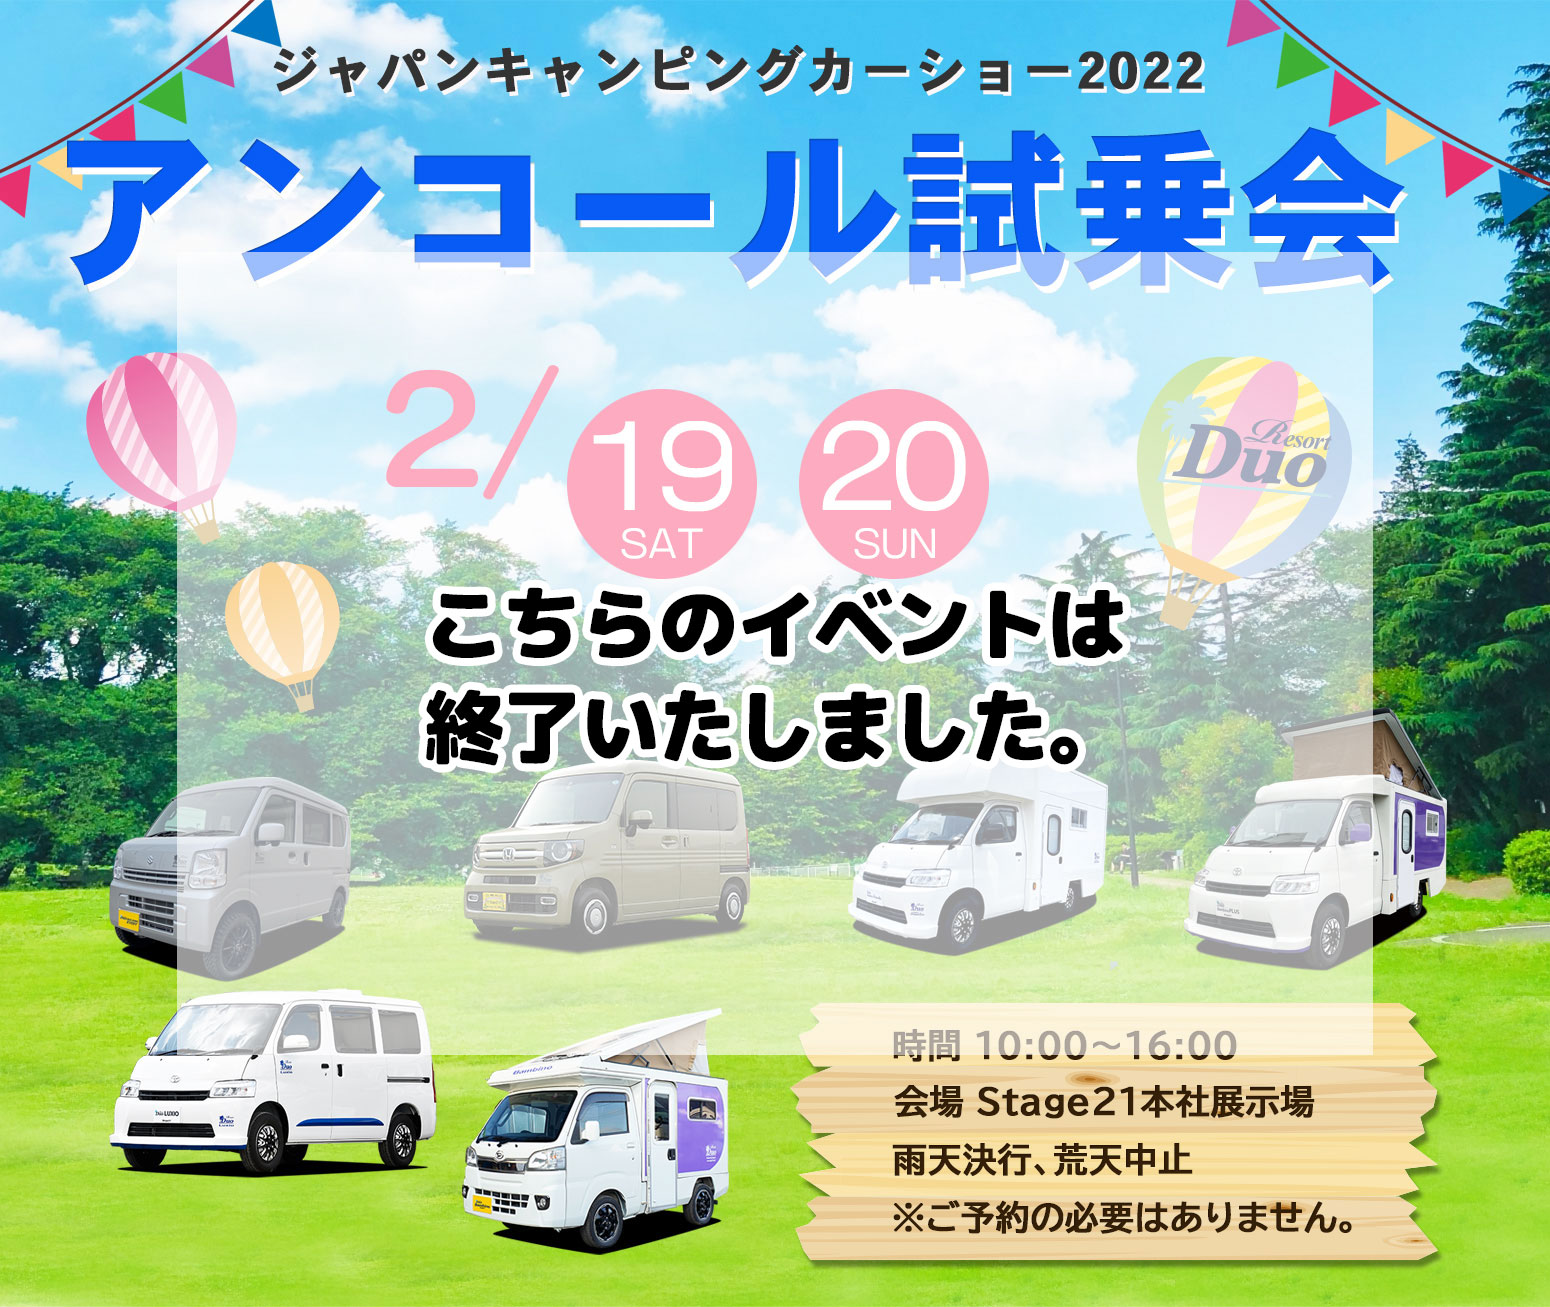 Stage21キャンピングカー・アンコール試乗商談会